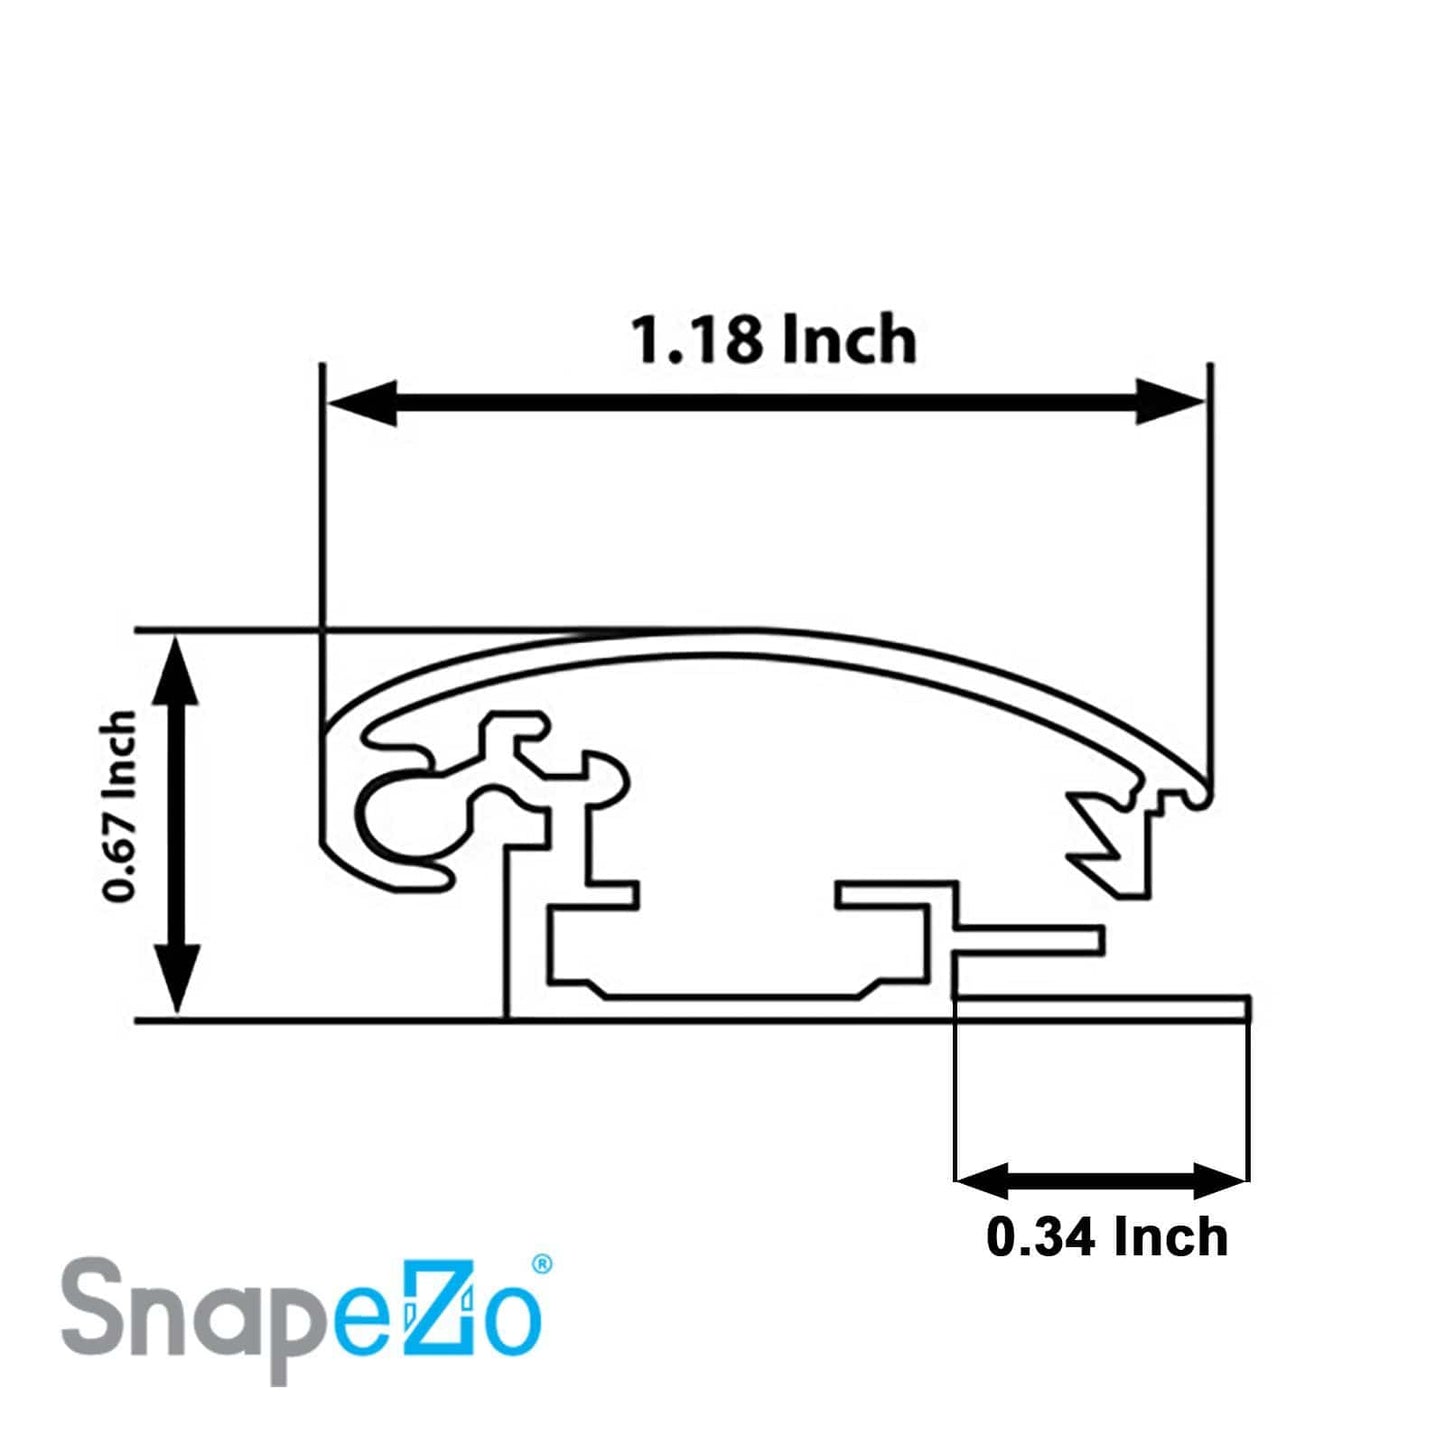 14x16 White SnapeZo® Snap Frame - 1.2" Profile - Snap Frames Direct